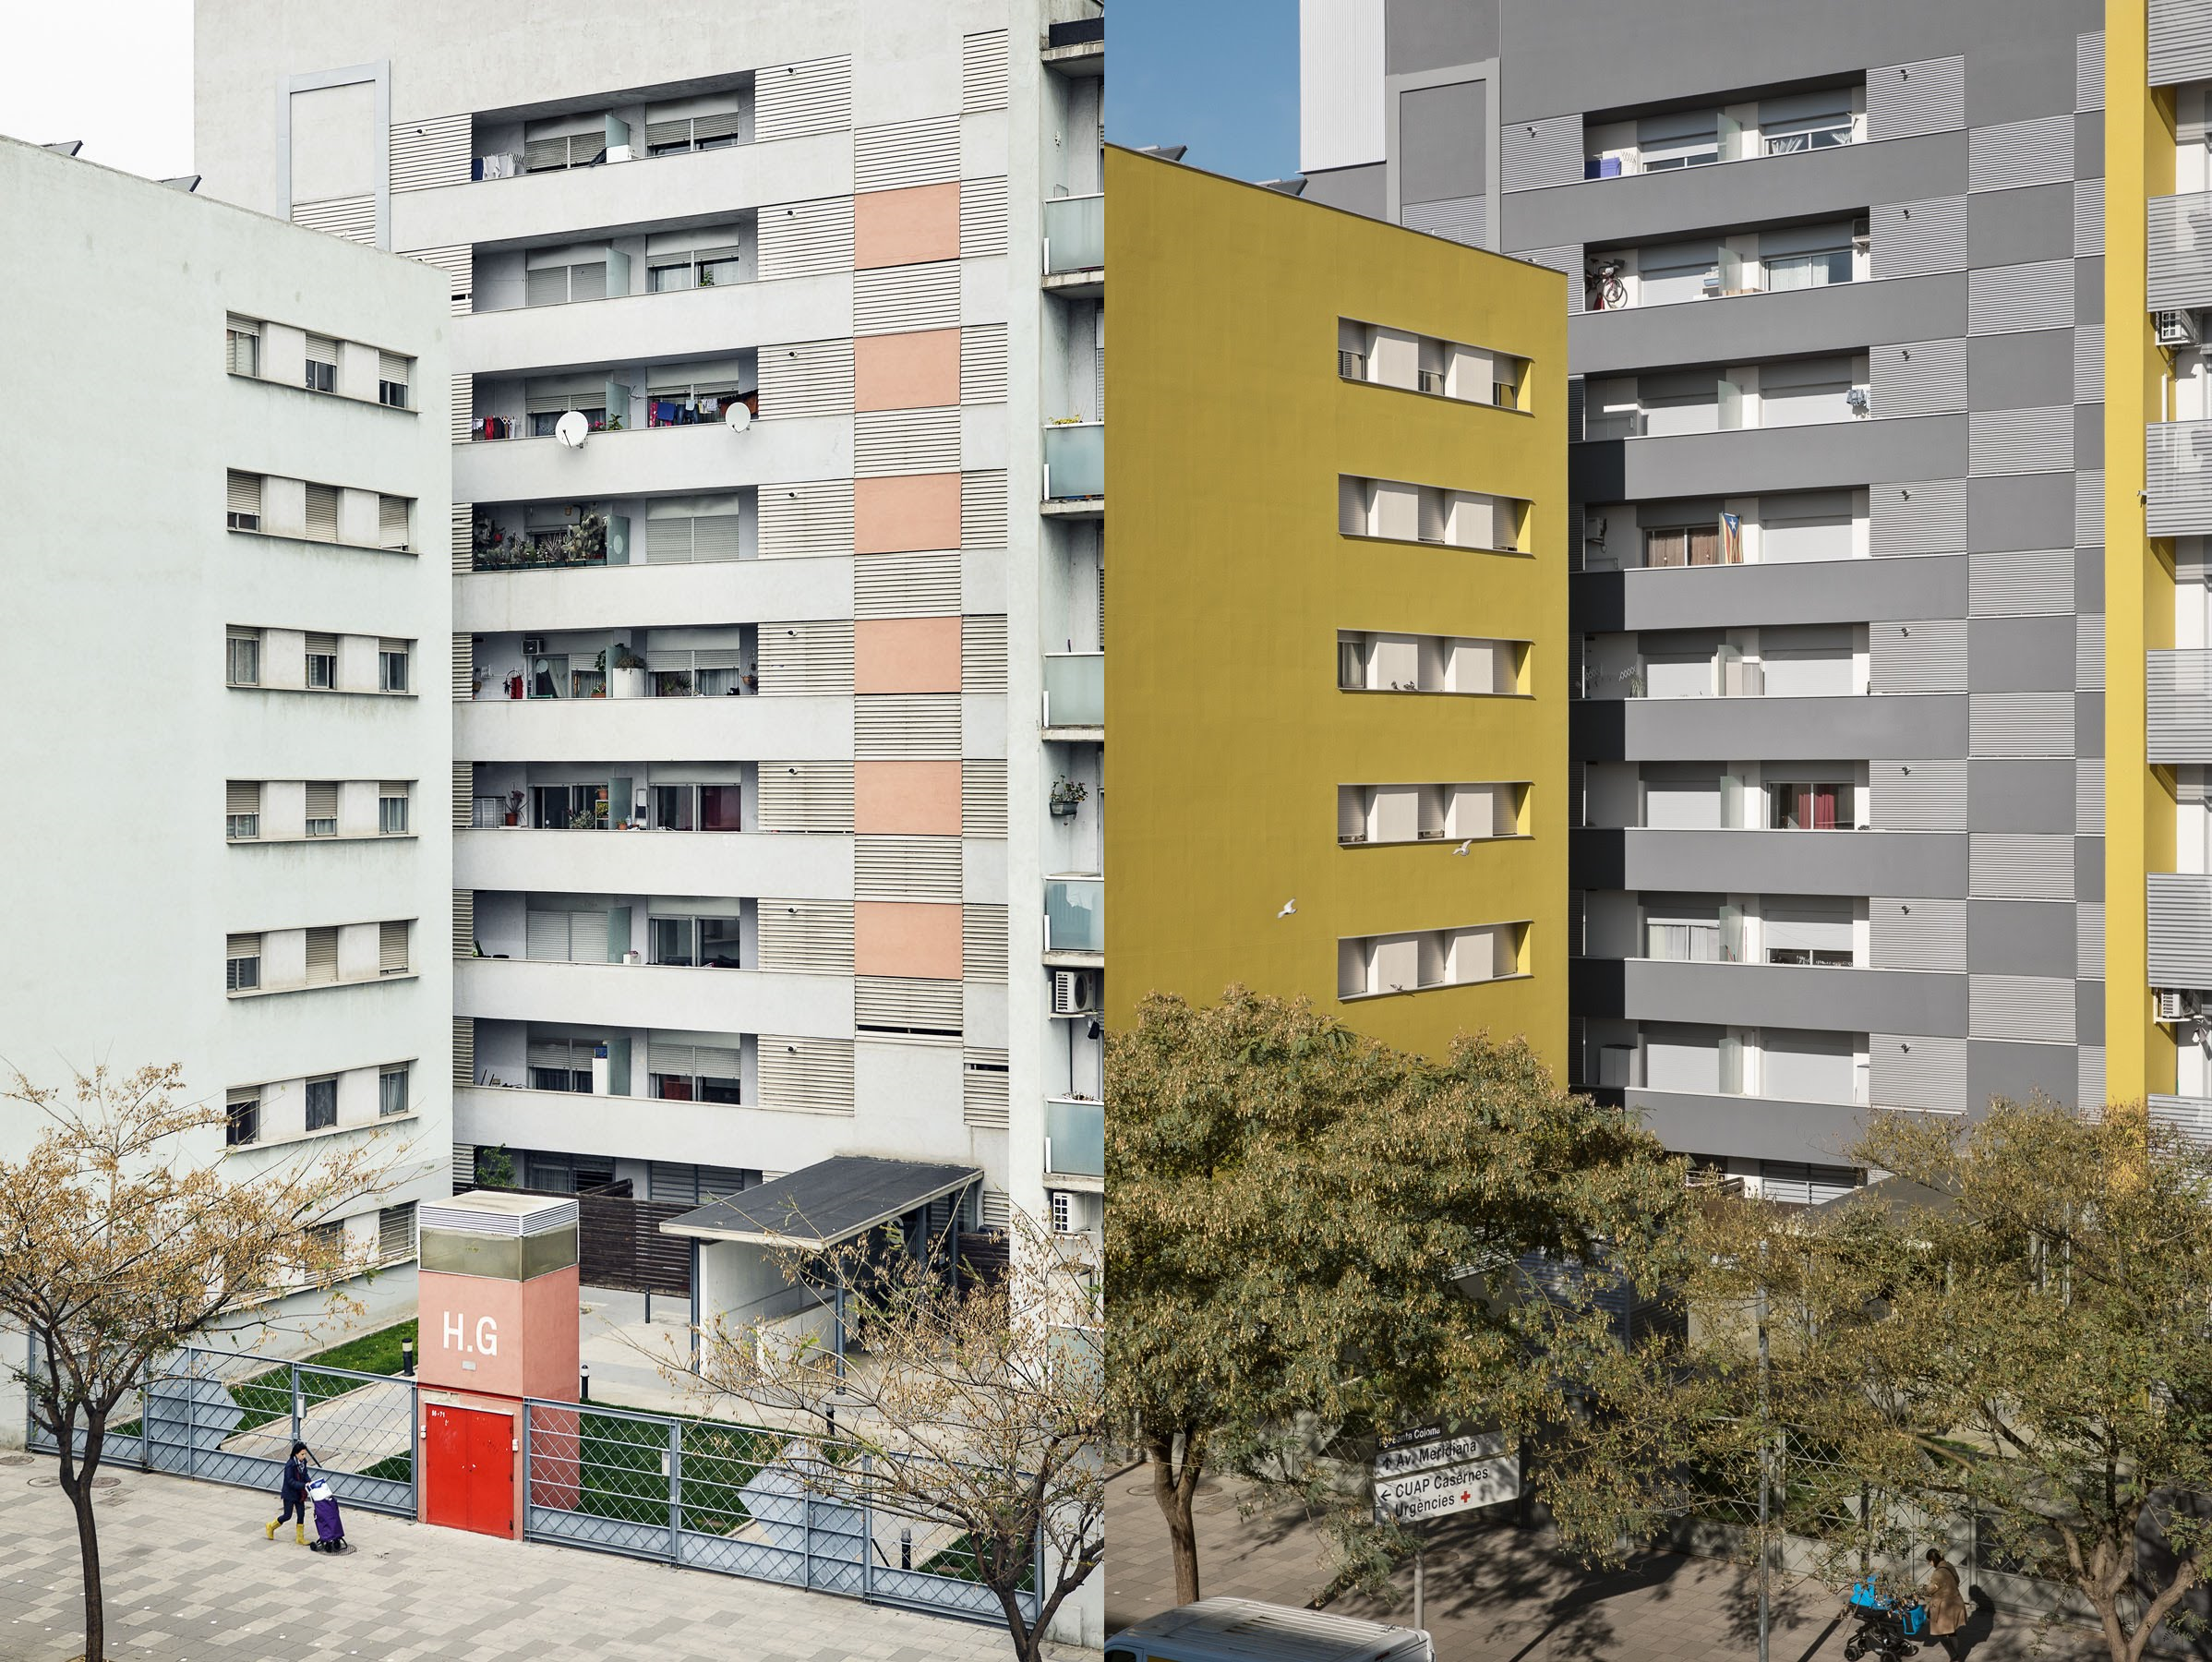 Rehabilitación energéticamente eficiente de un edificio de viviendas - Passeig Santa Coloma